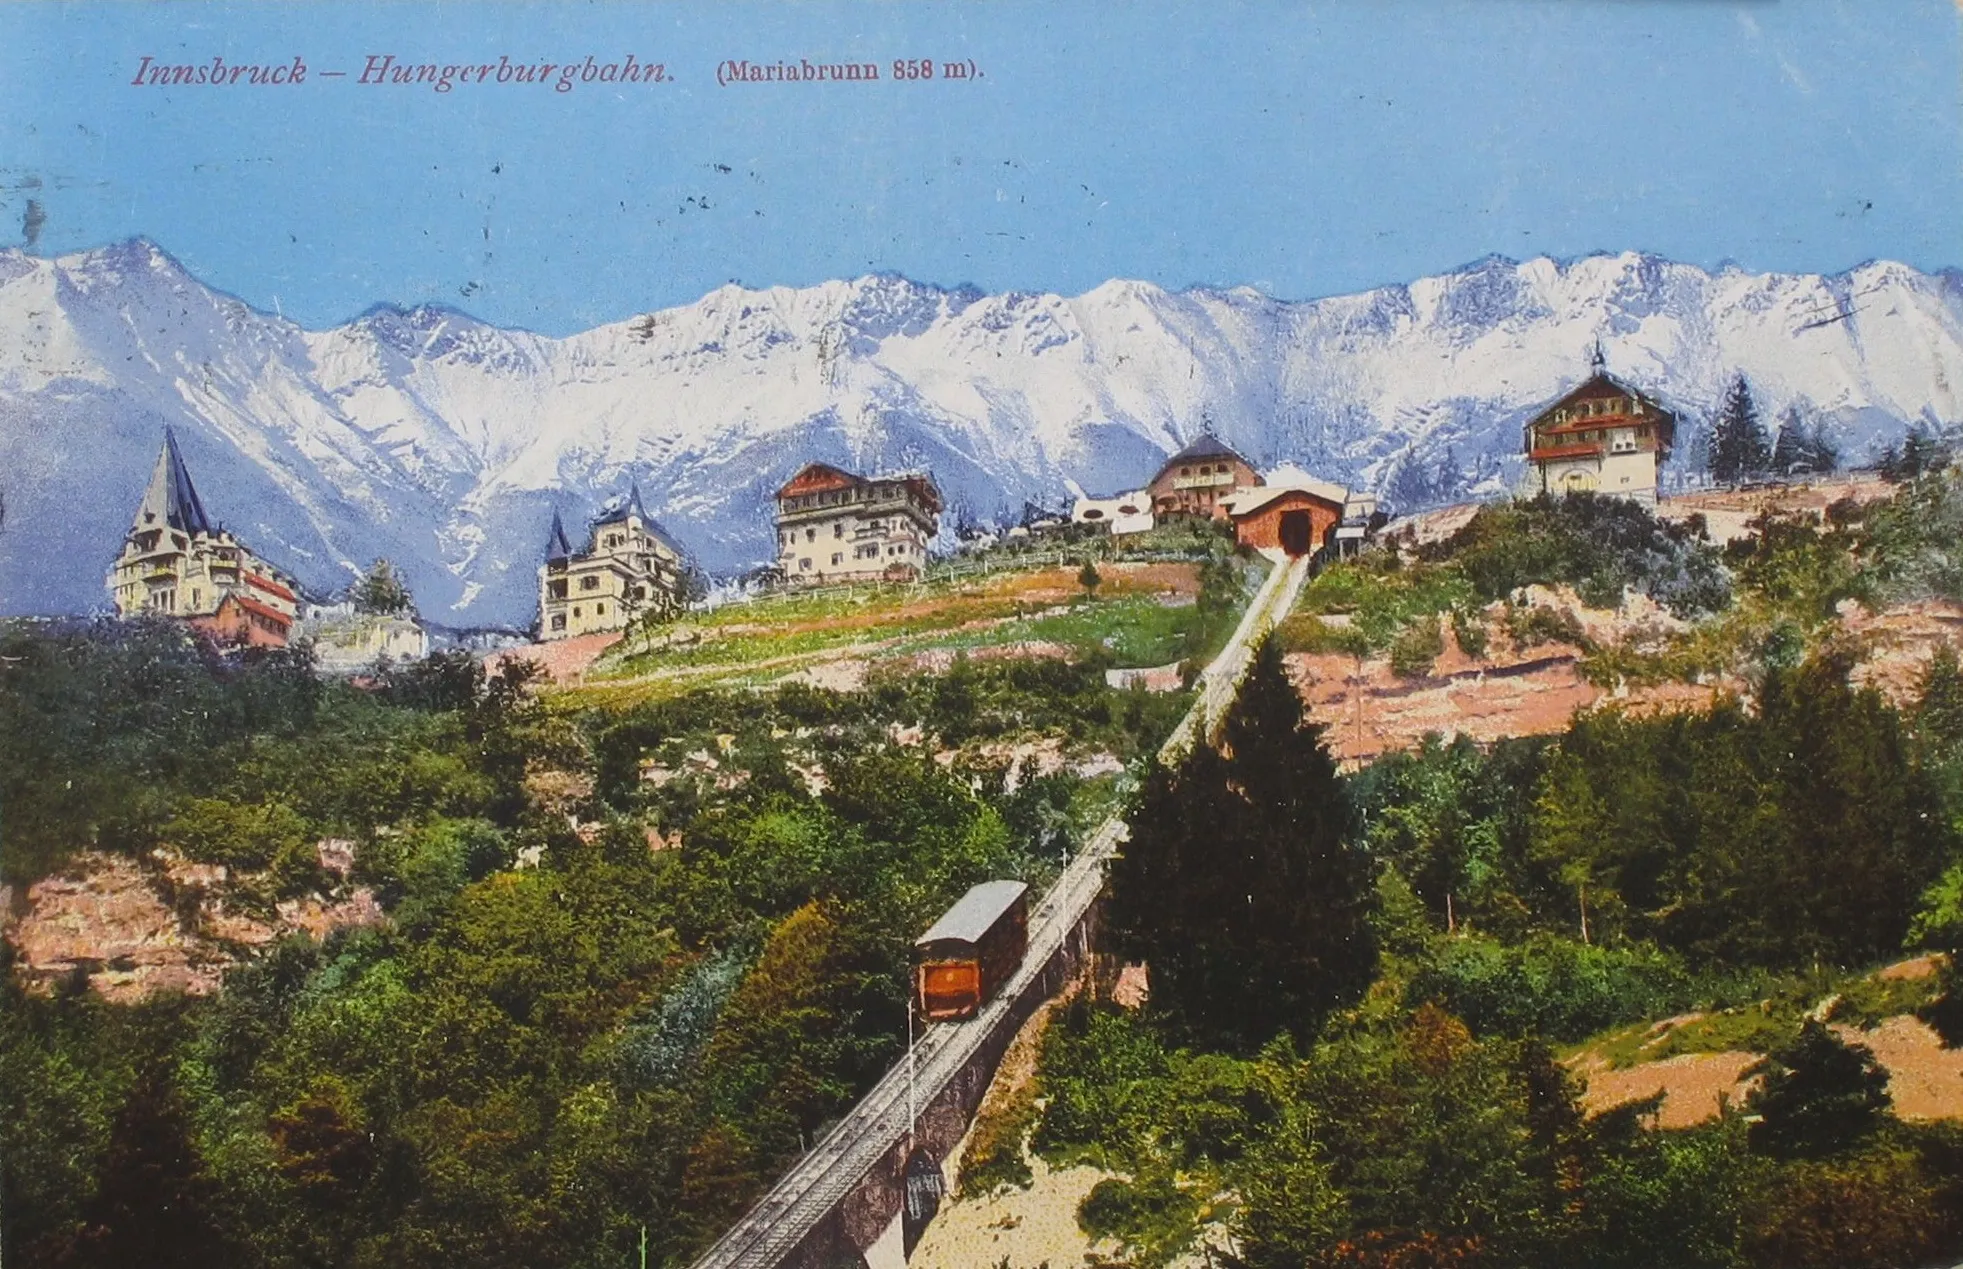 Photo showing: Innsbruck, Hungerburgbahn, Mariabrunn 858 m. Postkarte mit Poststempel 28.7.1927